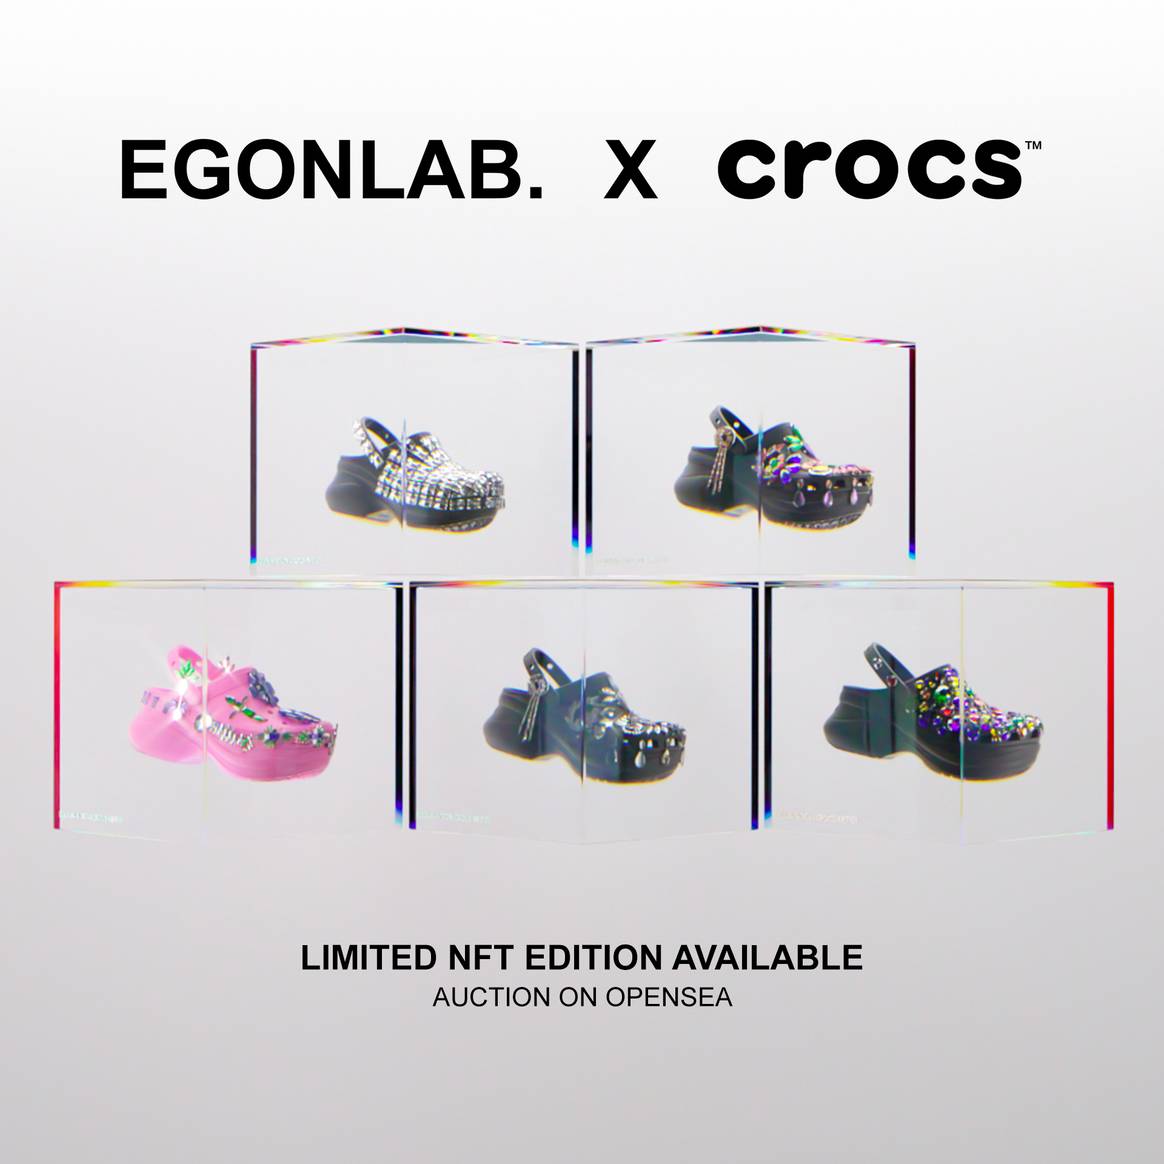 Image: Egonlab x Crocs